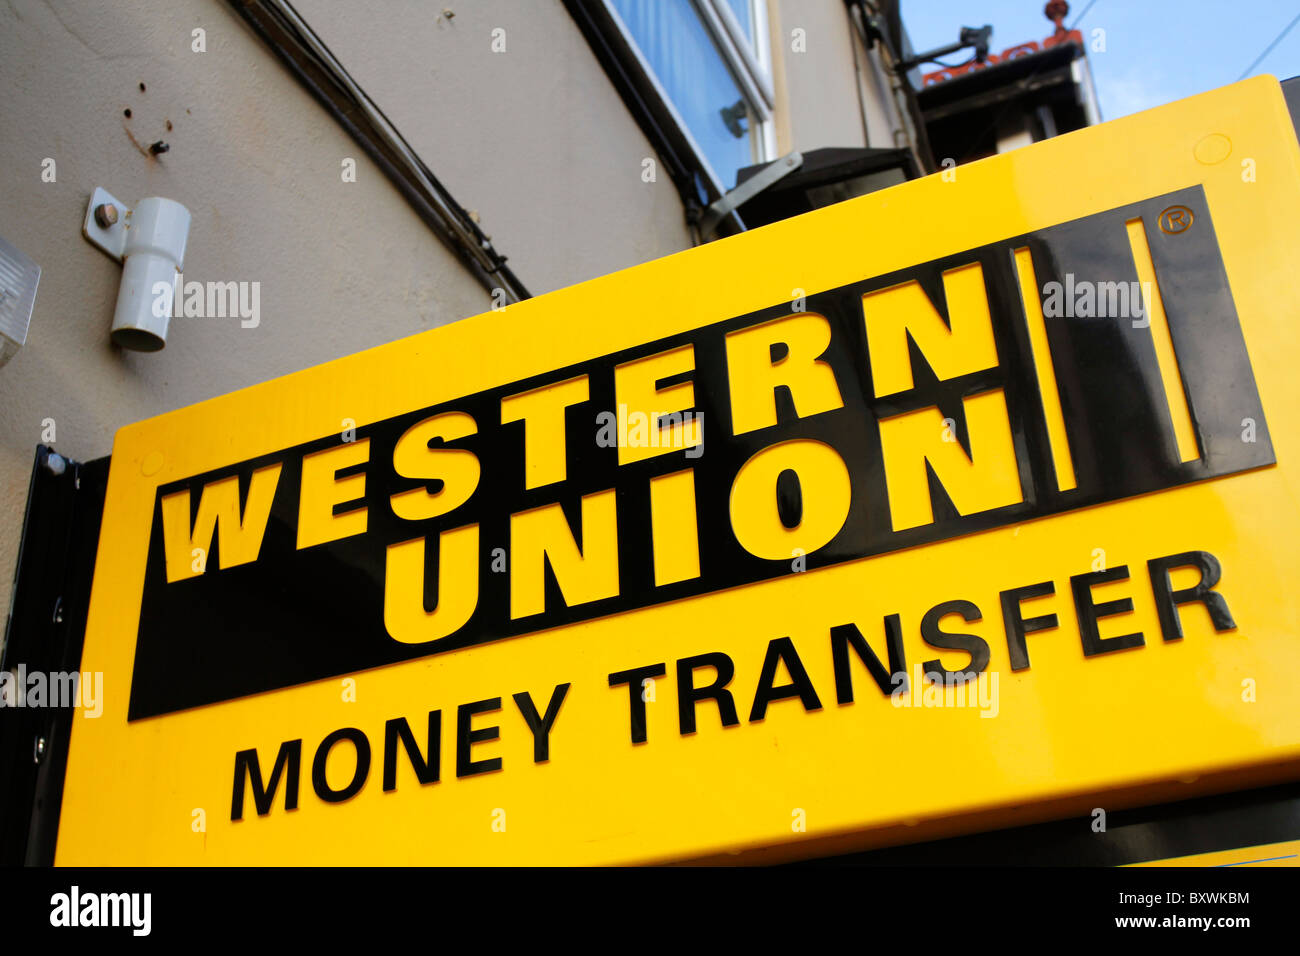 Western Union sign Stock Photo - Alamy